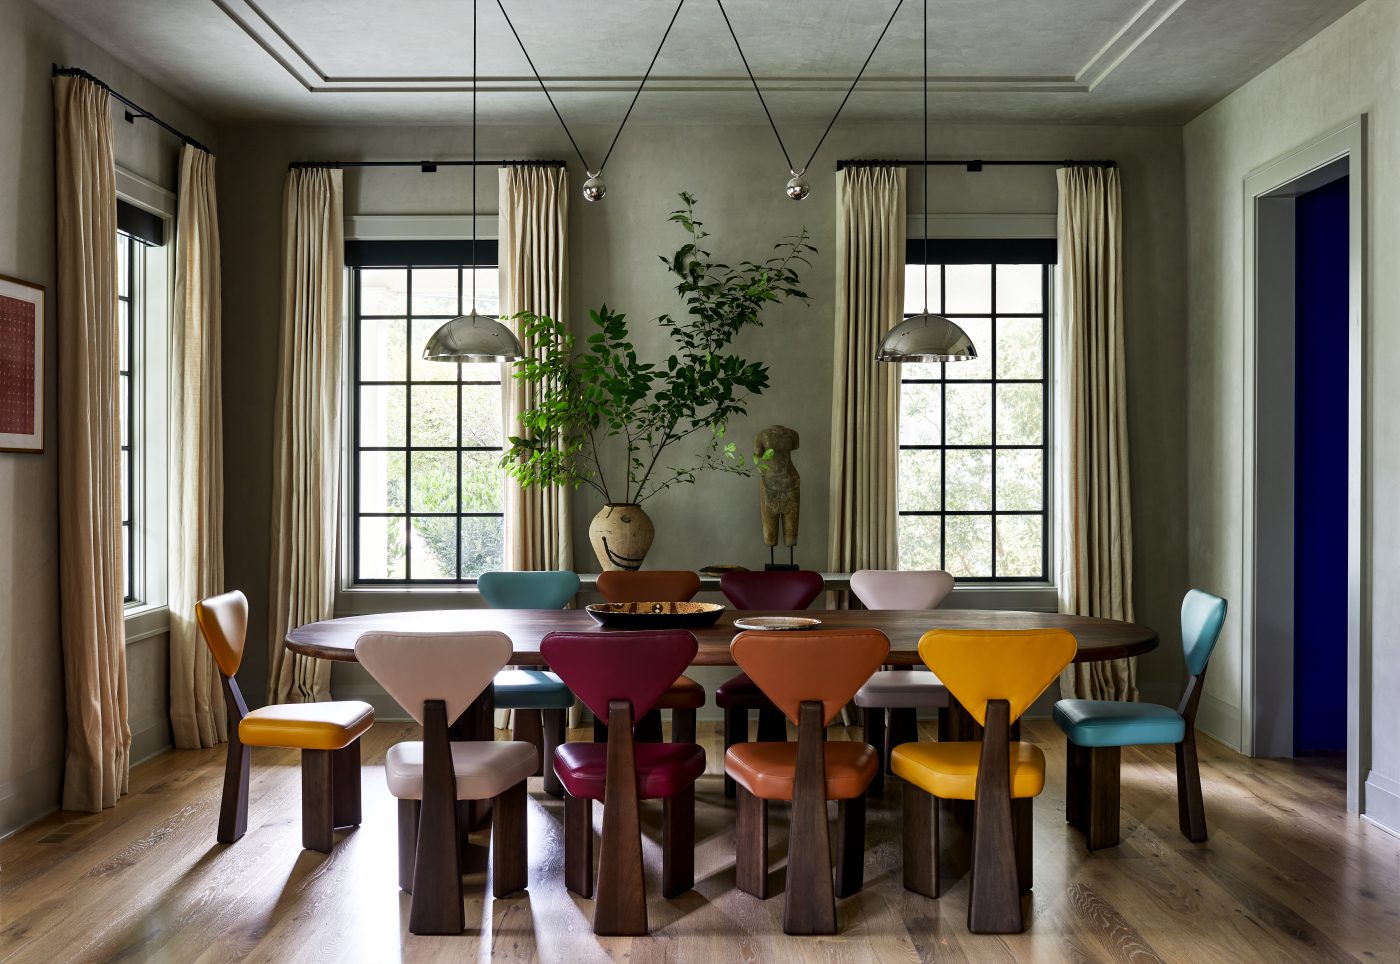 Dining room of Zoe Feldman designed home in Virginia suburbs of Washington DC